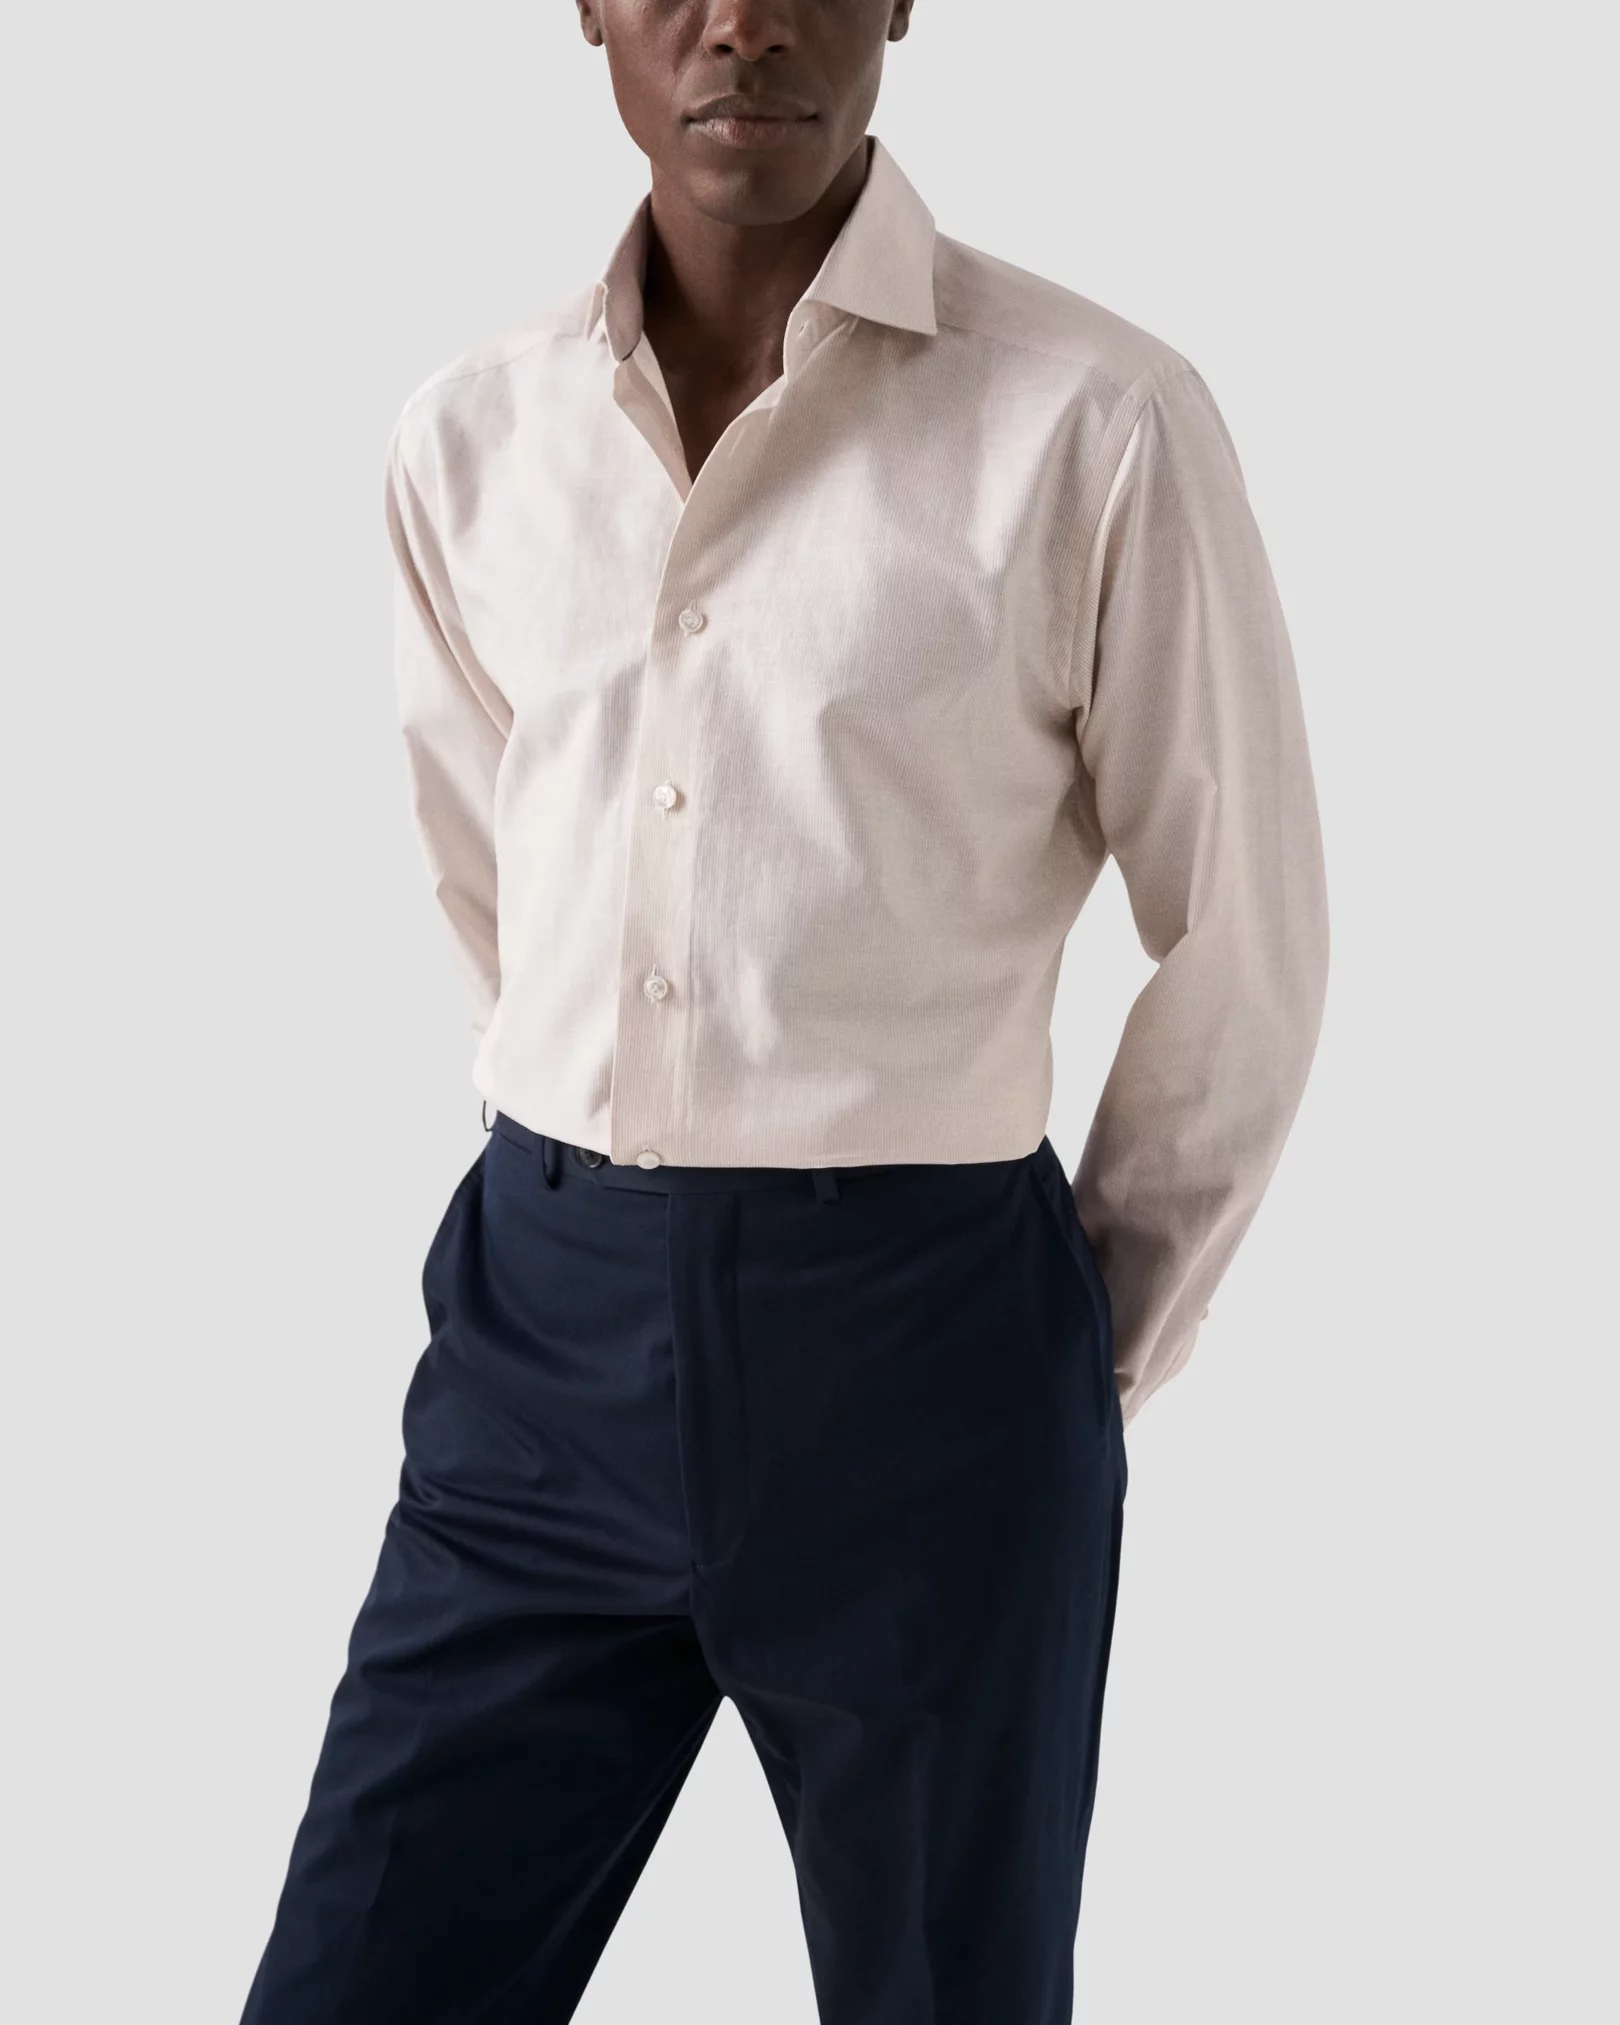 Eton - Light Brown Striped Wrinkle Free Cotton Linen Shirt